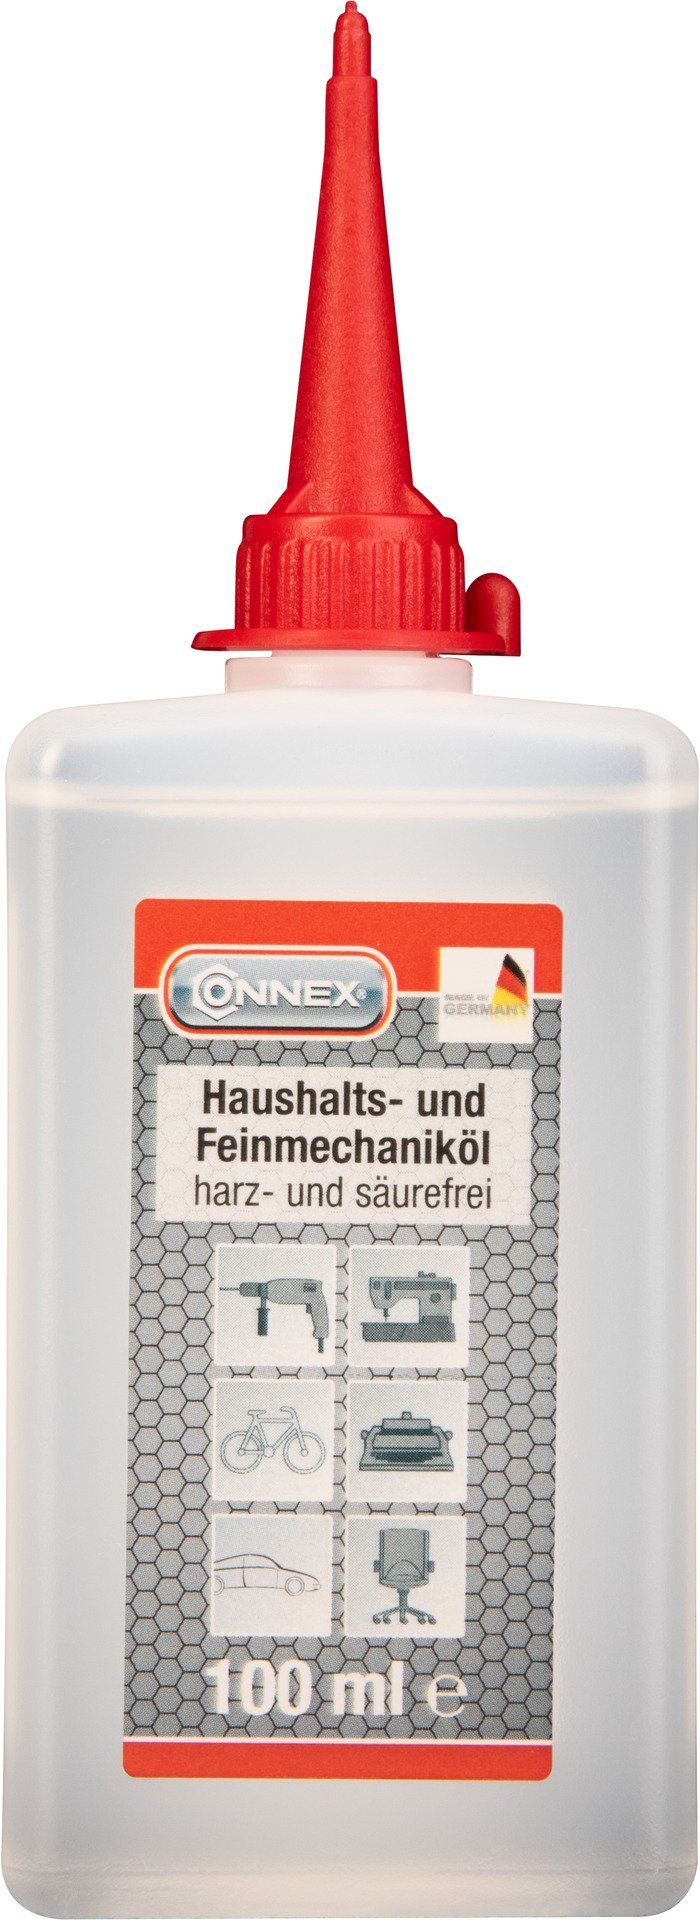 Conmetall Meister GmbH Haushaltsöl 100ml